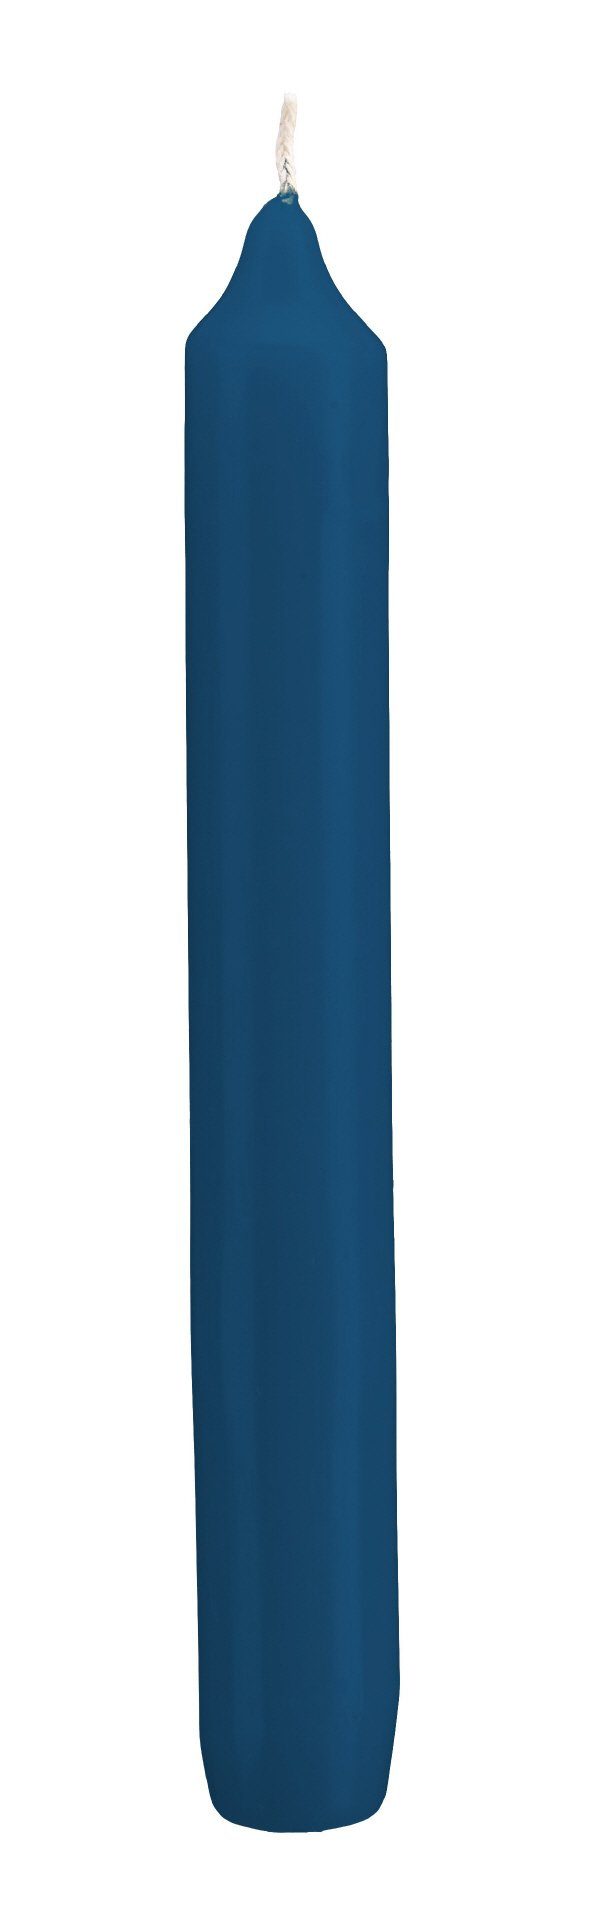 Kopschitz Kerzen Tafelkerze Leuchterkerzen Petrol Blau 200 x Ø 25 mm, 12 Stück